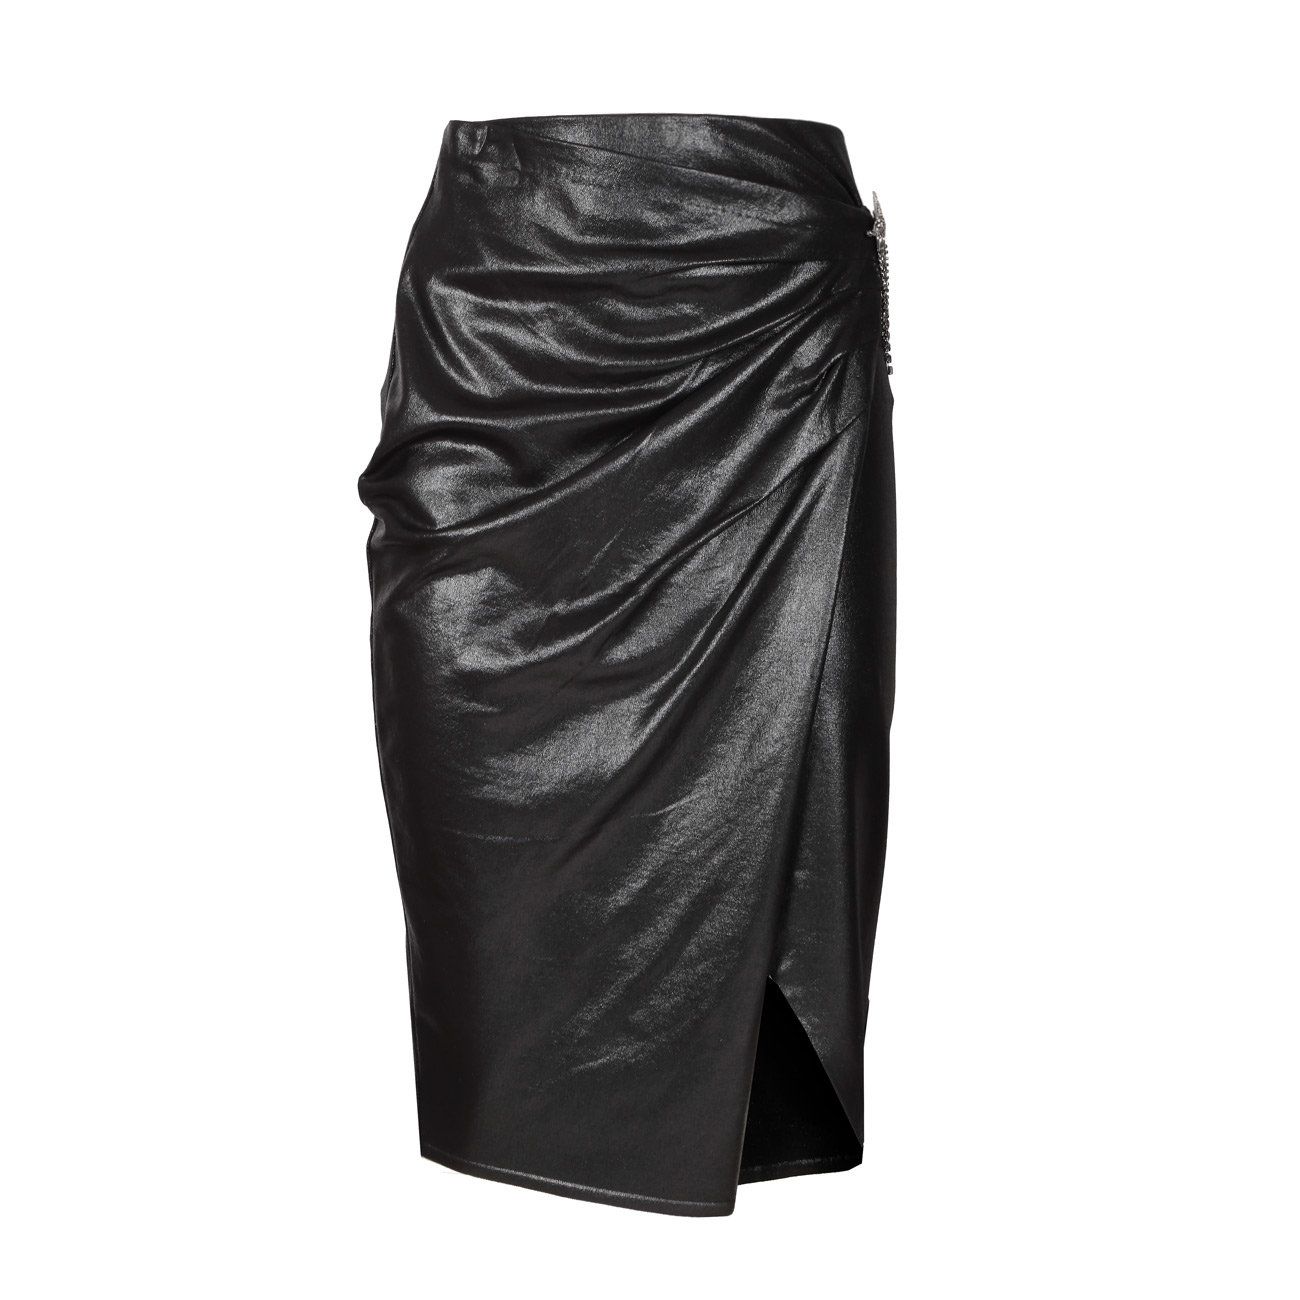 Shirred Wrap Skirt